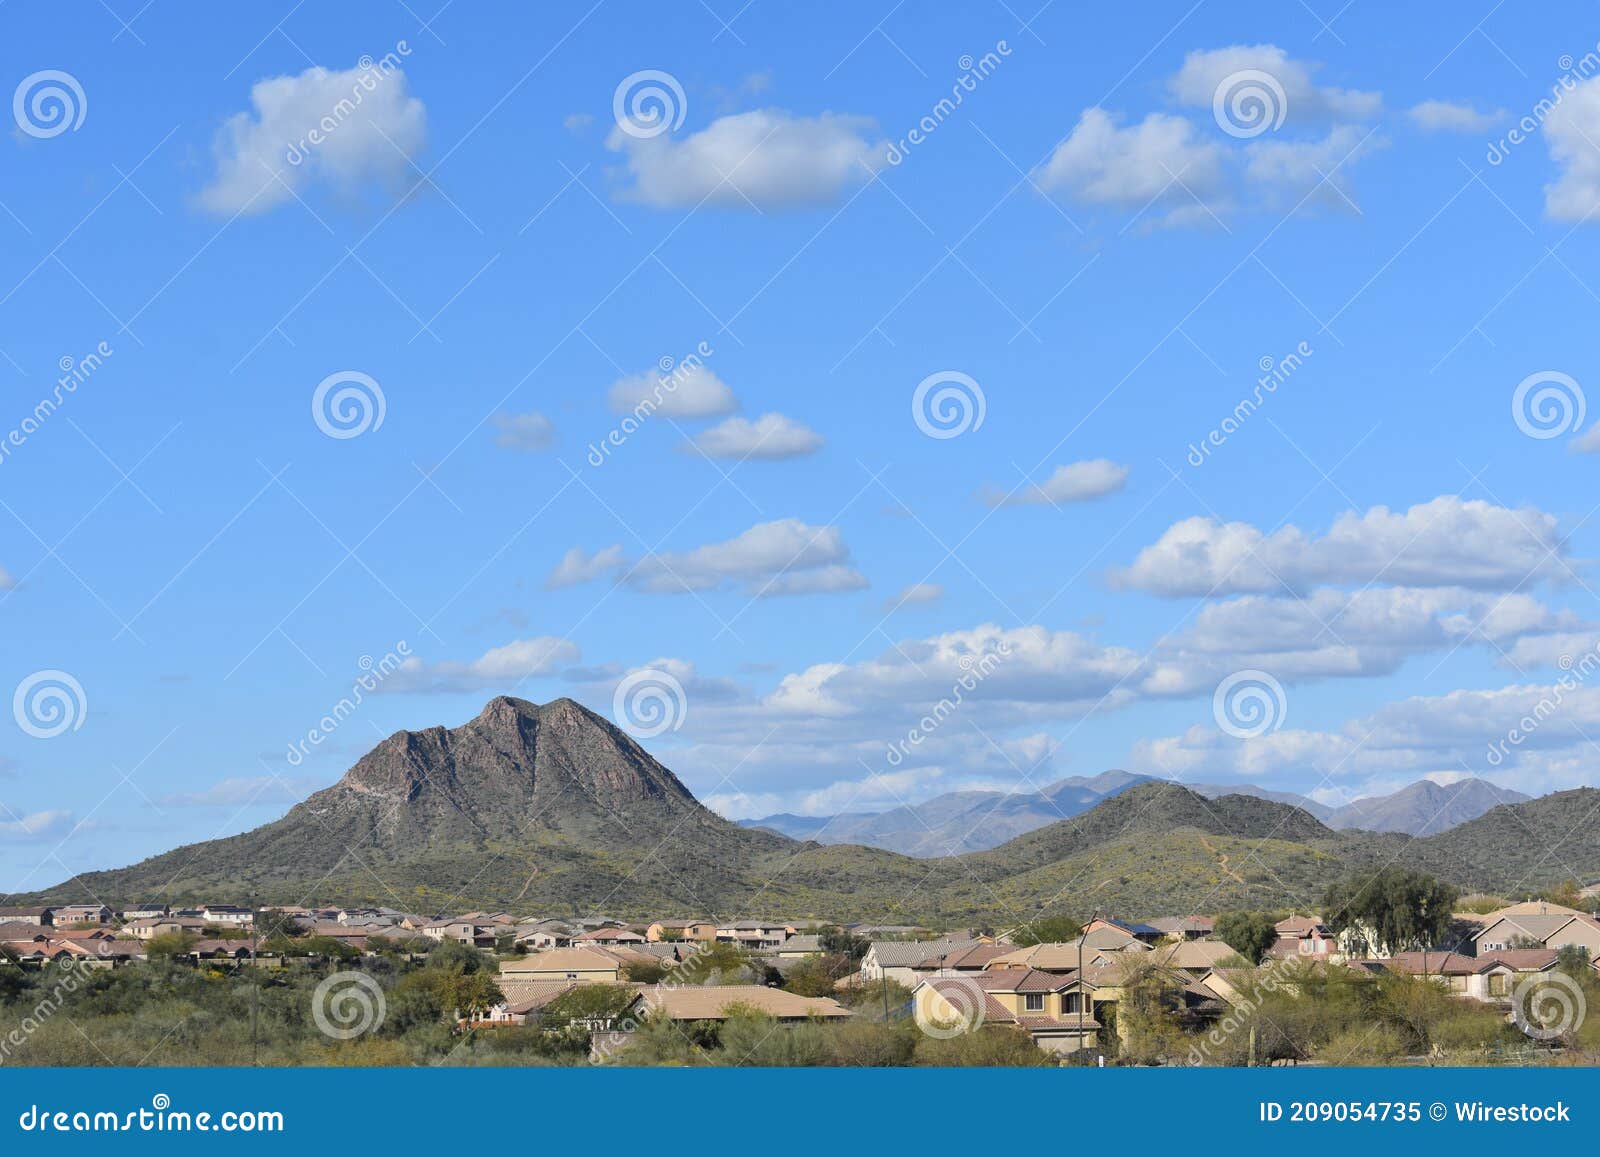 beautiful shot of the gavilan peak mountain view north of phoenix in new river, arizona